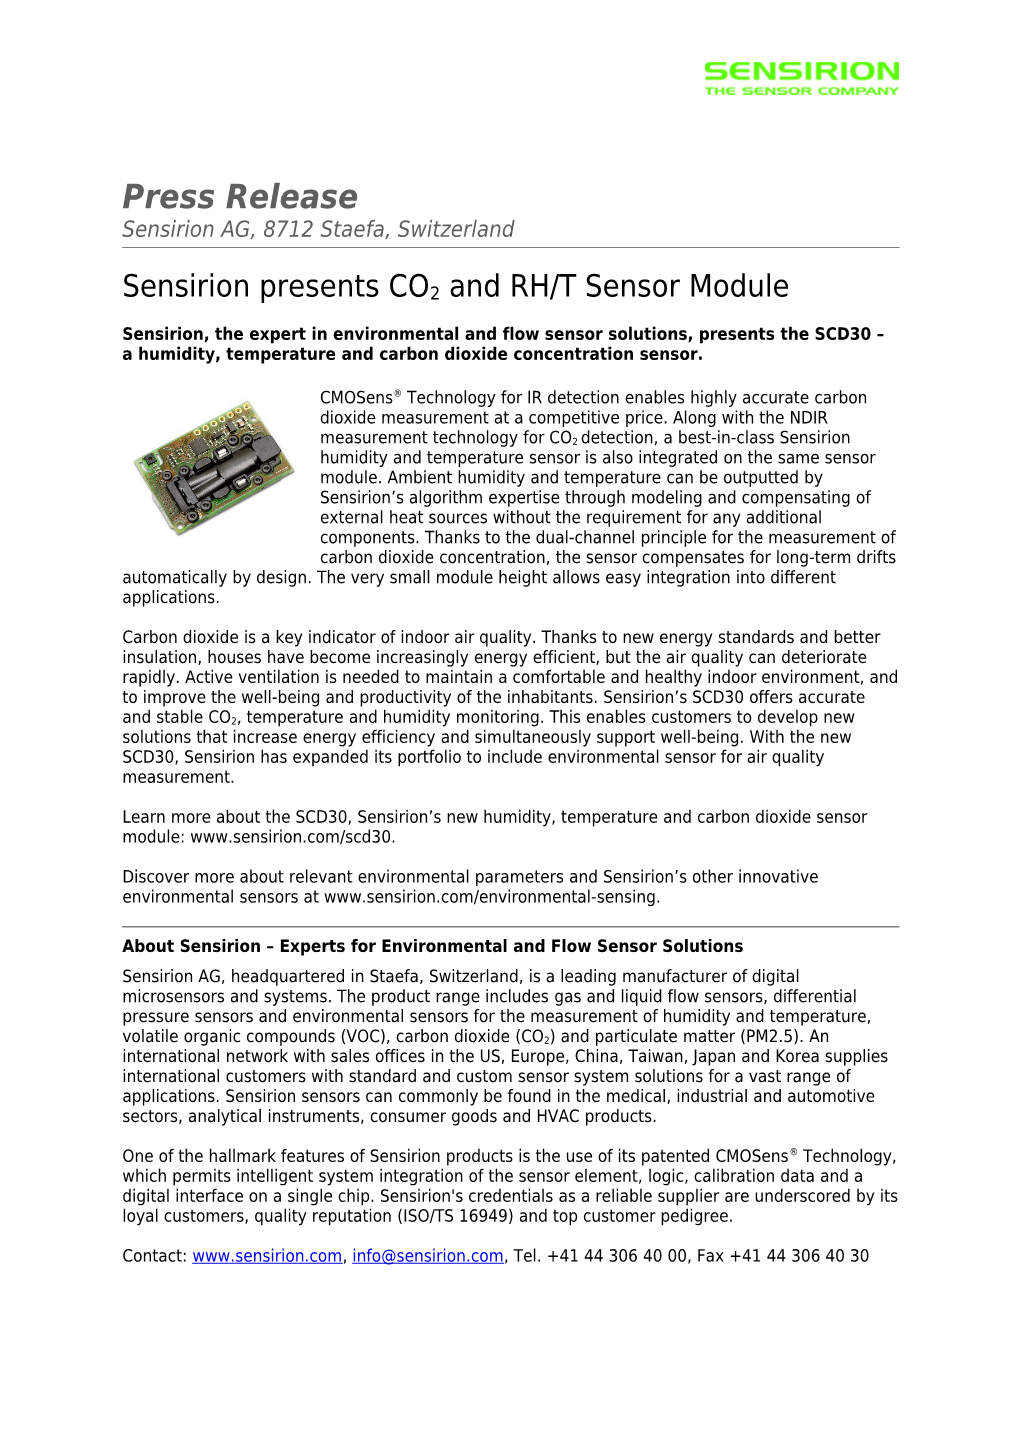 Sensirion Presents CO2 and RH/T Sensor Module